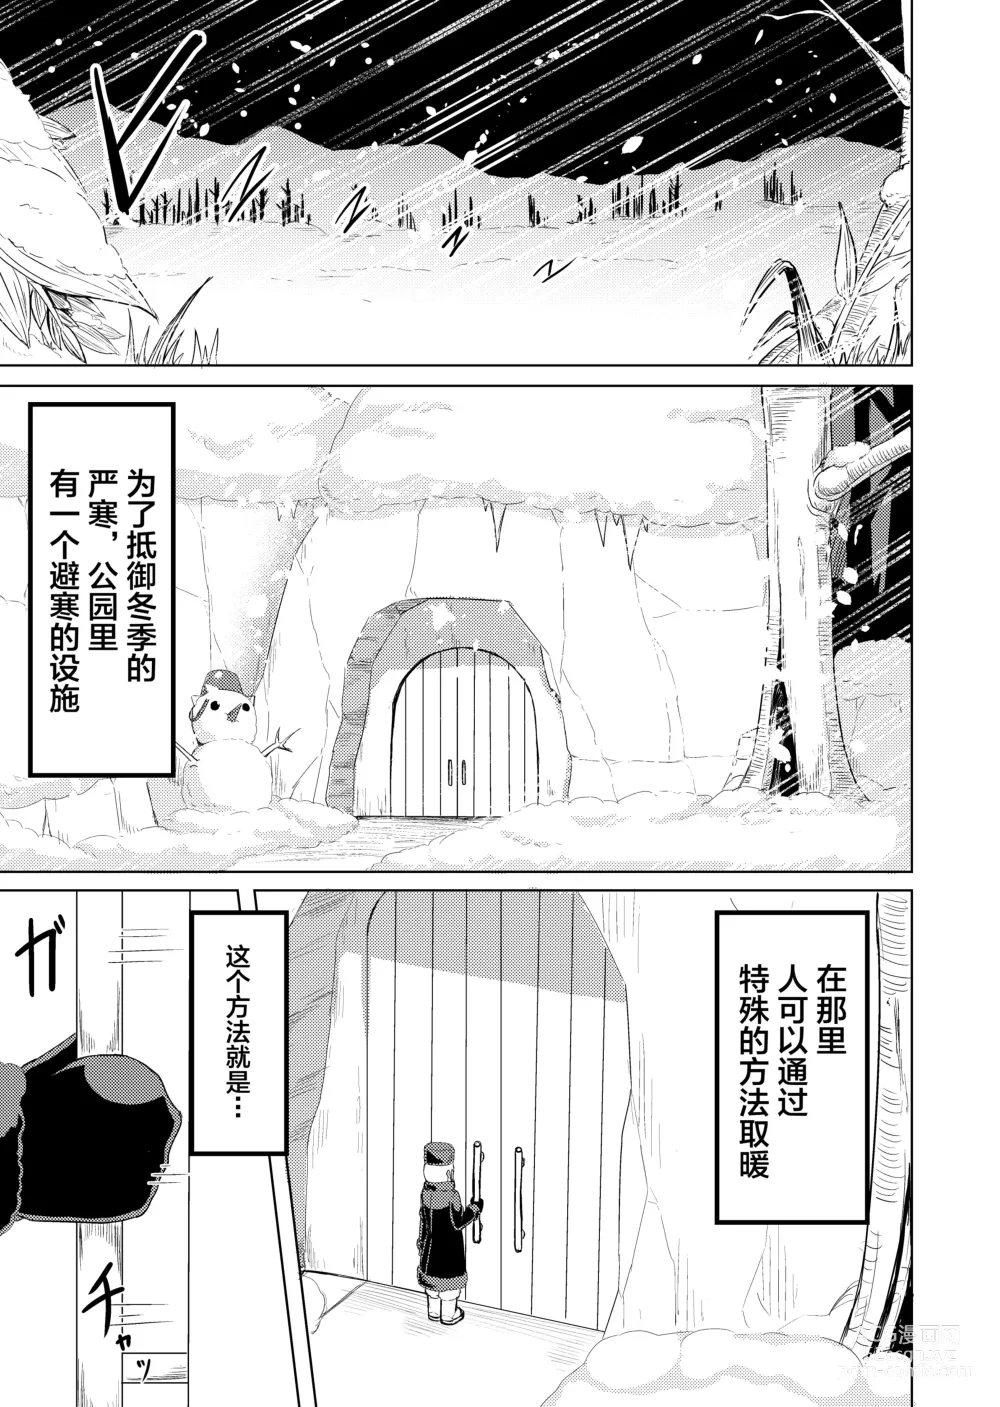 Page 2 of doujinshi Nukunuku Friends